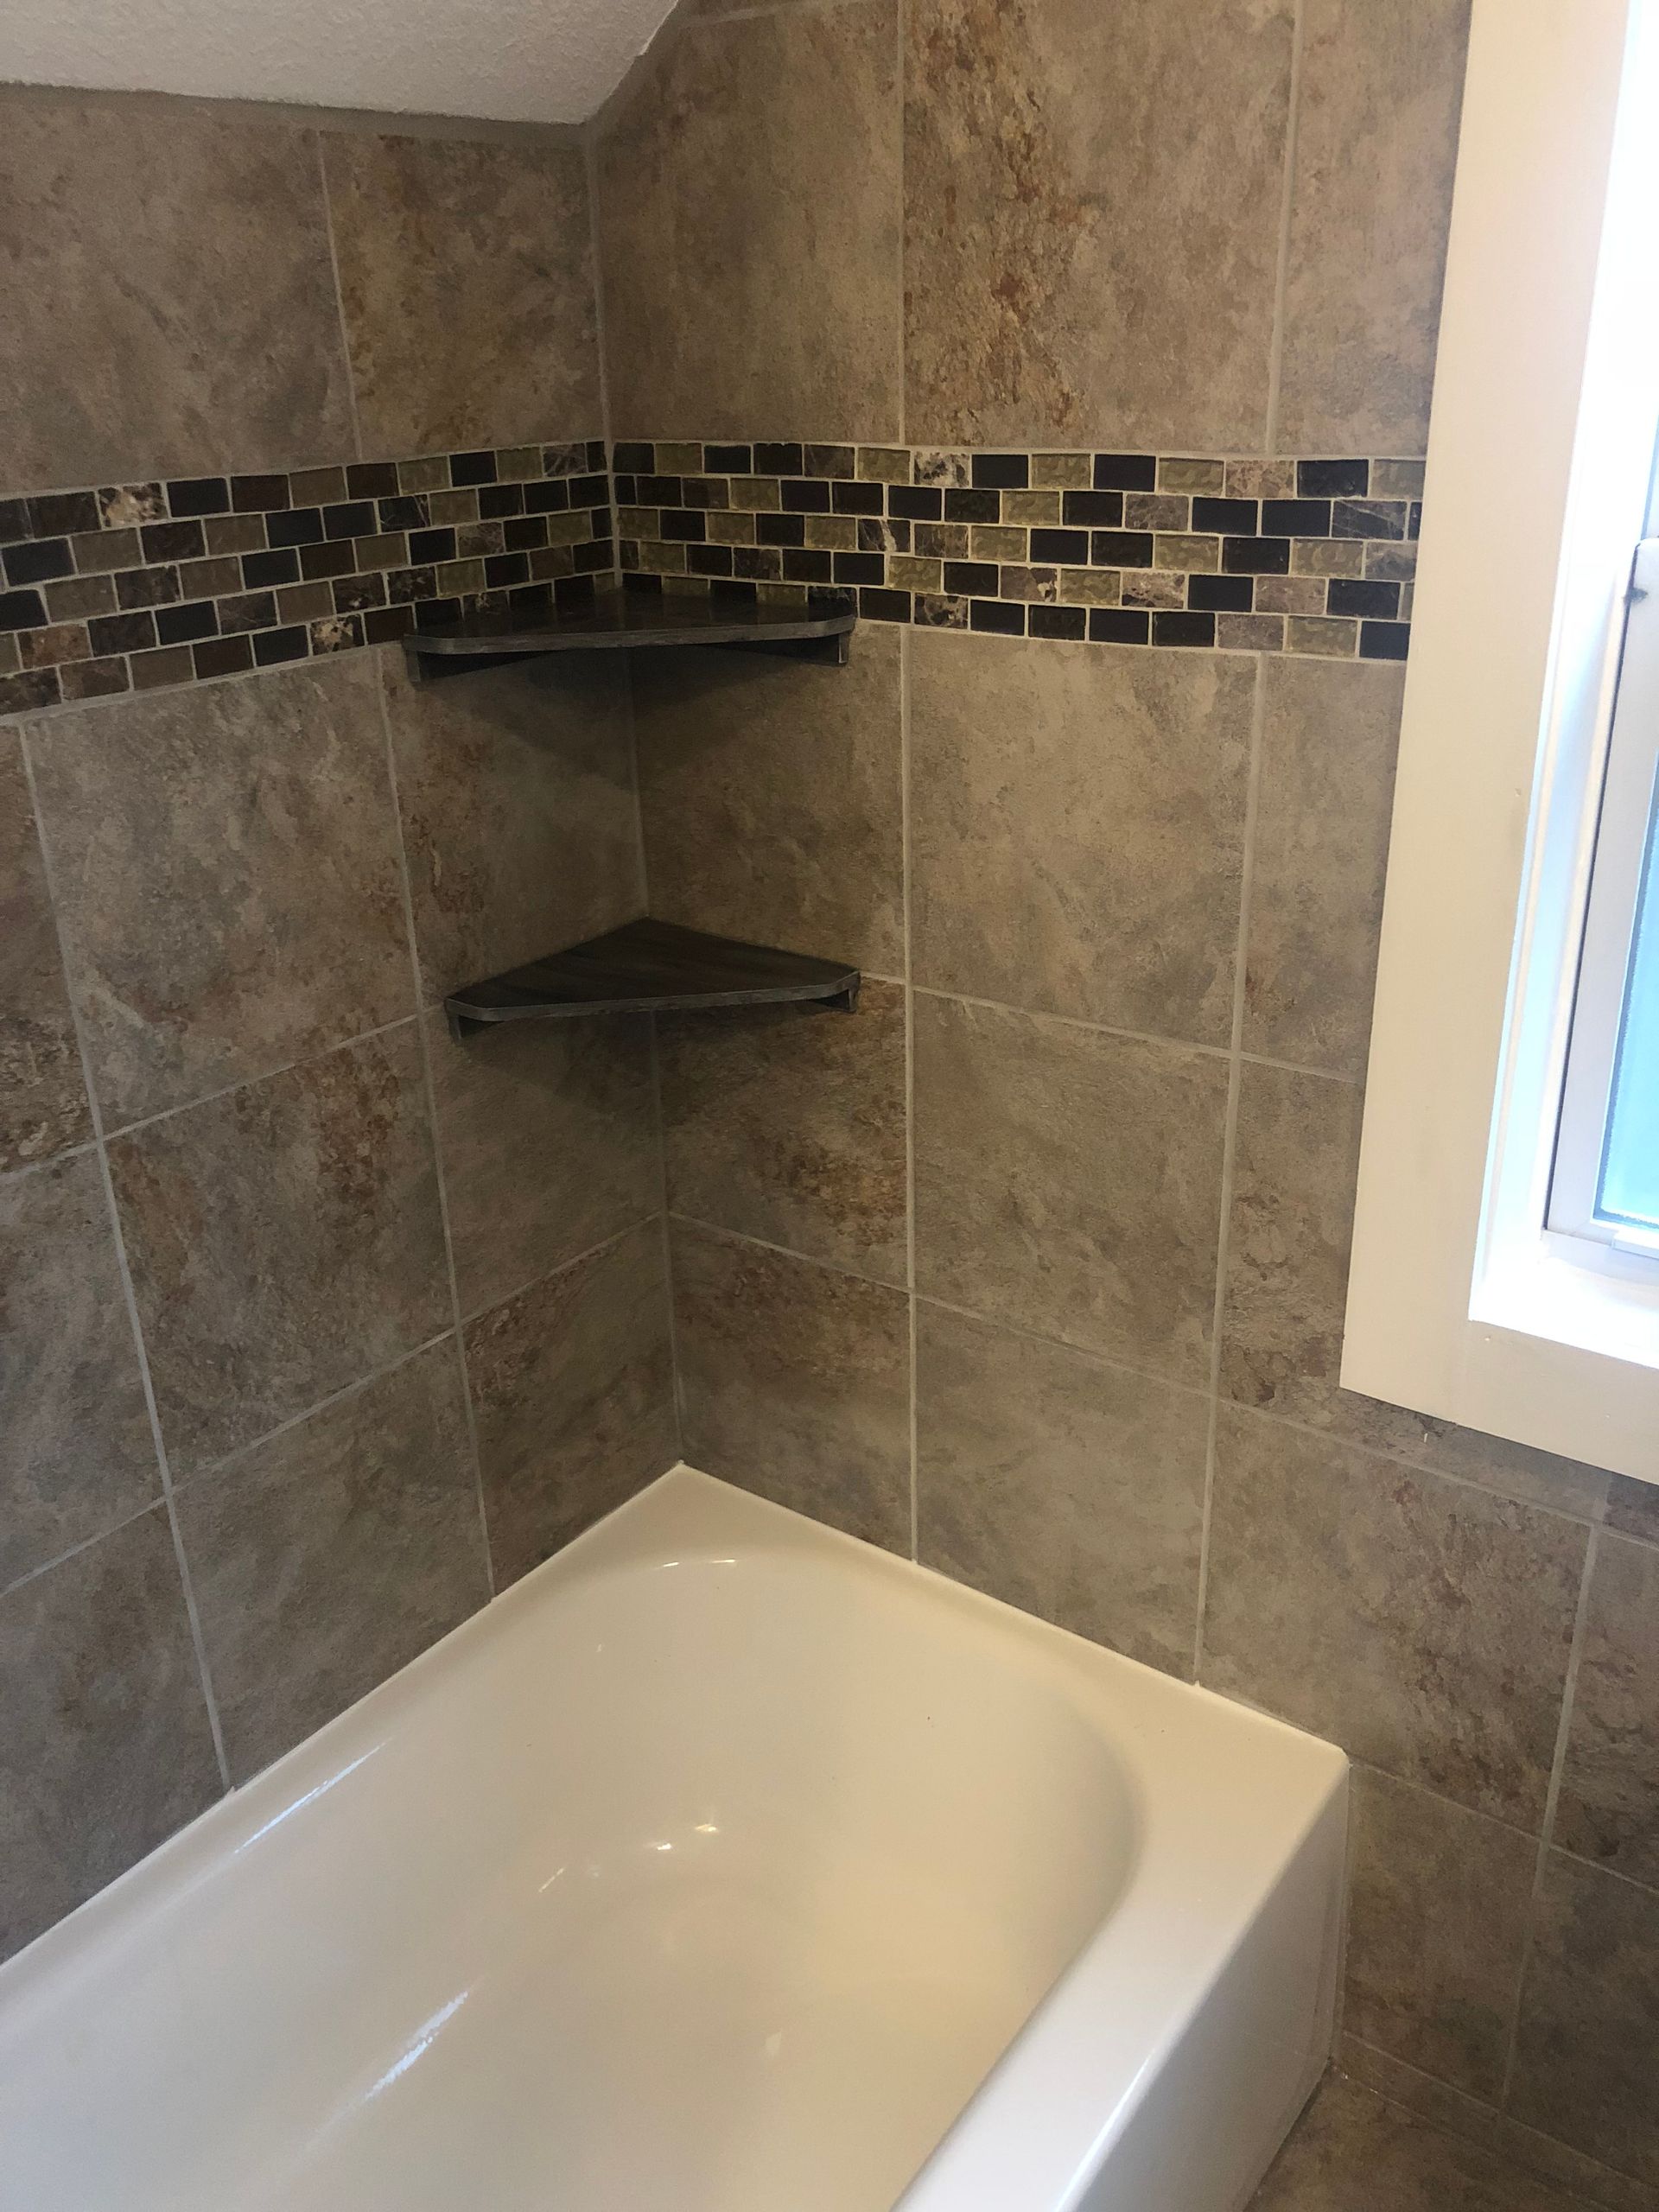 A bathtub in a bathroom with tiled walls and a window.